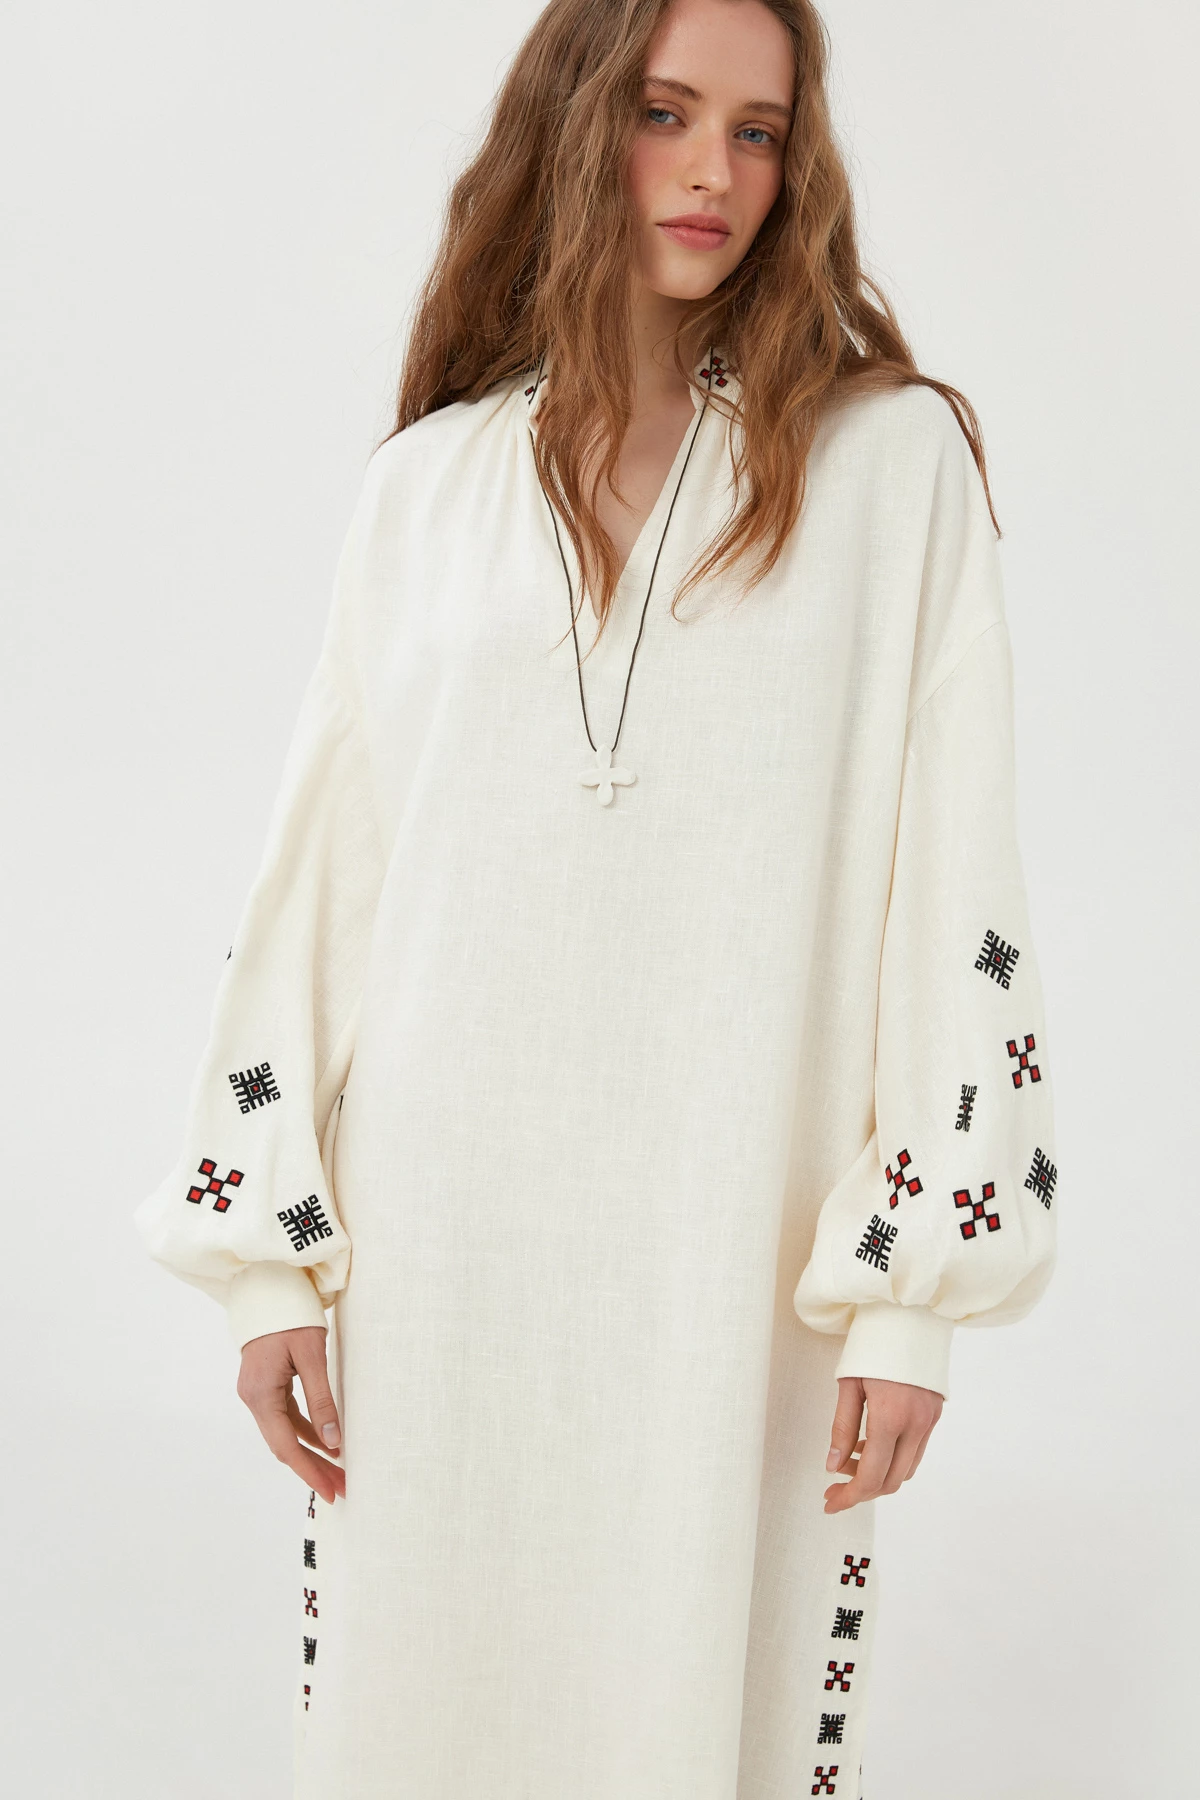 Milky linen vyshyvanka dress with geometric embroidery, photo 1